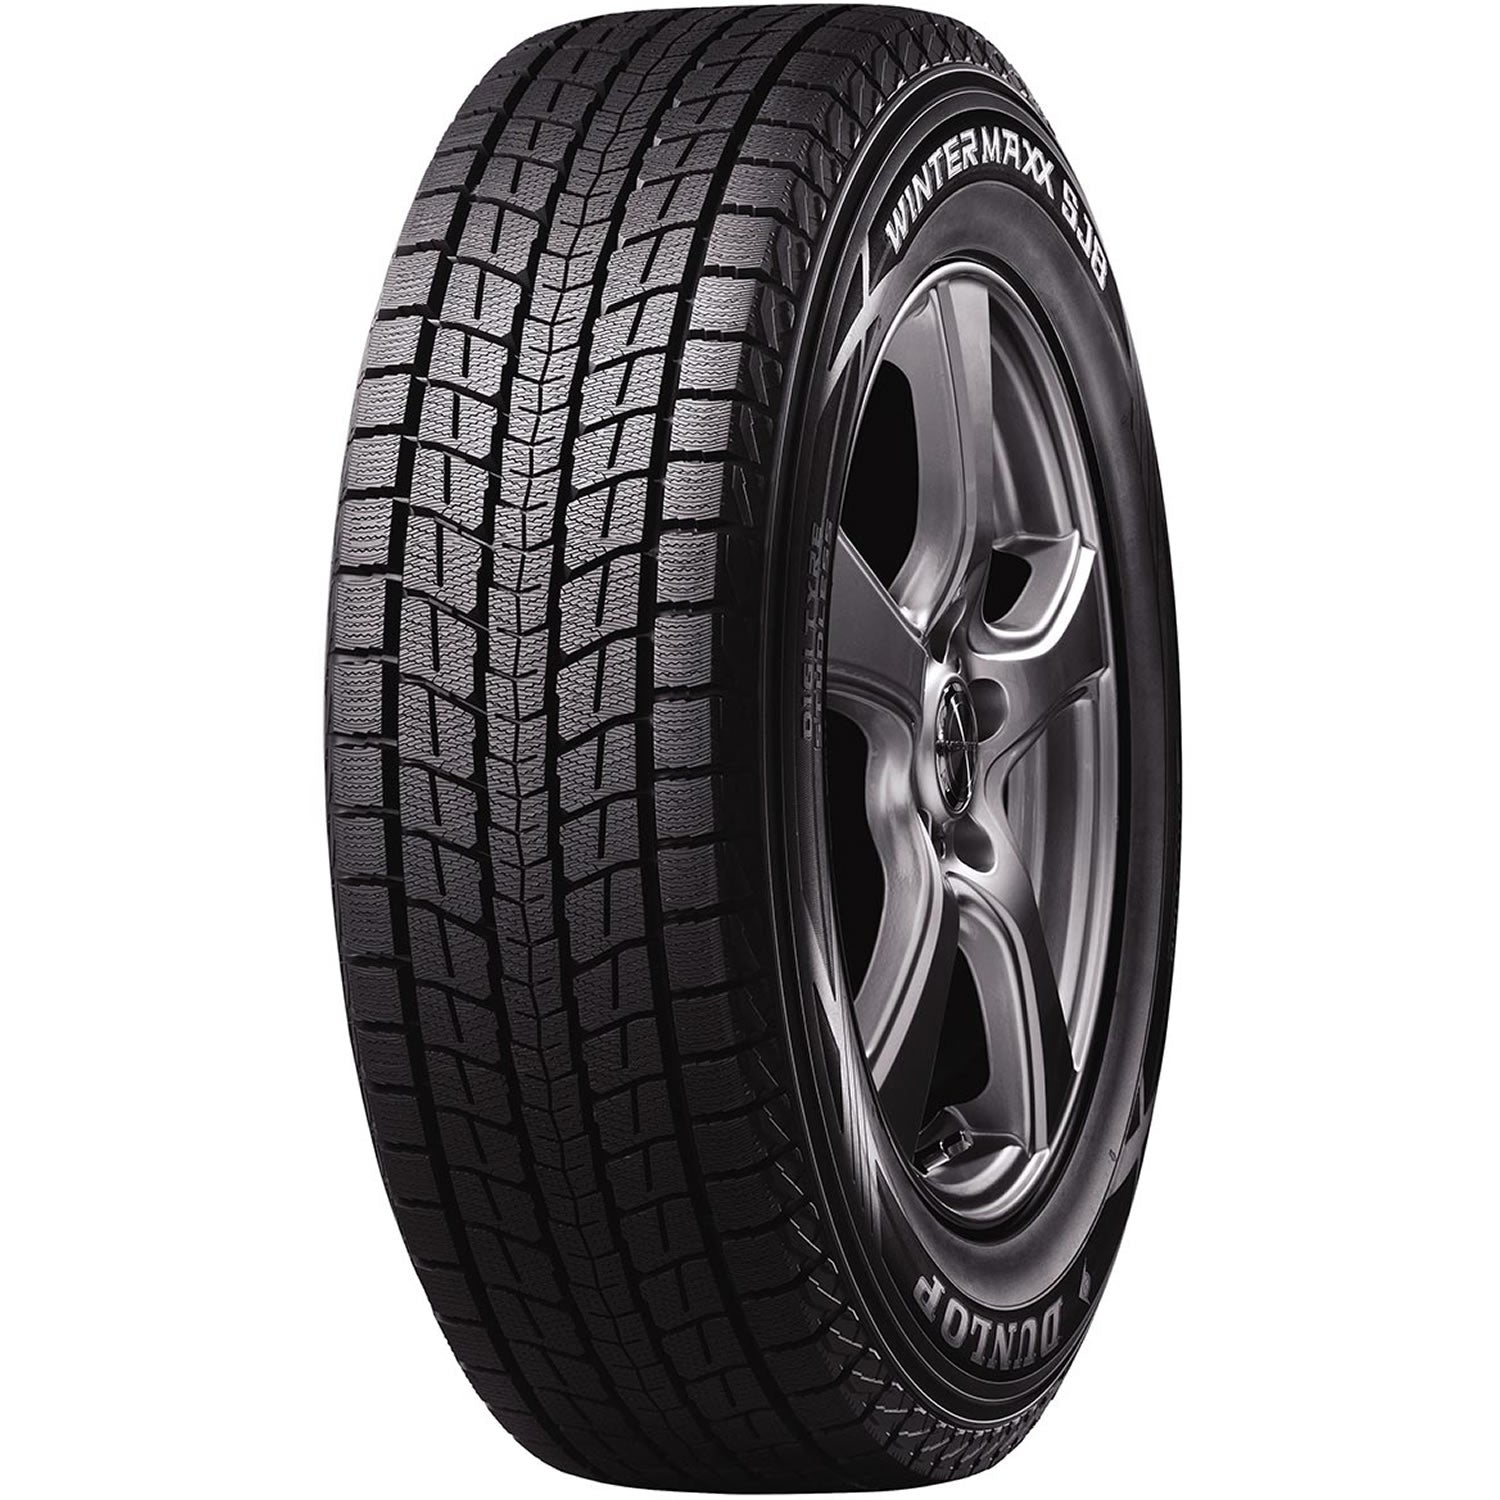 DUNLOP WINTER MAXX SJ8 225/60R18 (28.6X8.9R 18) Tires